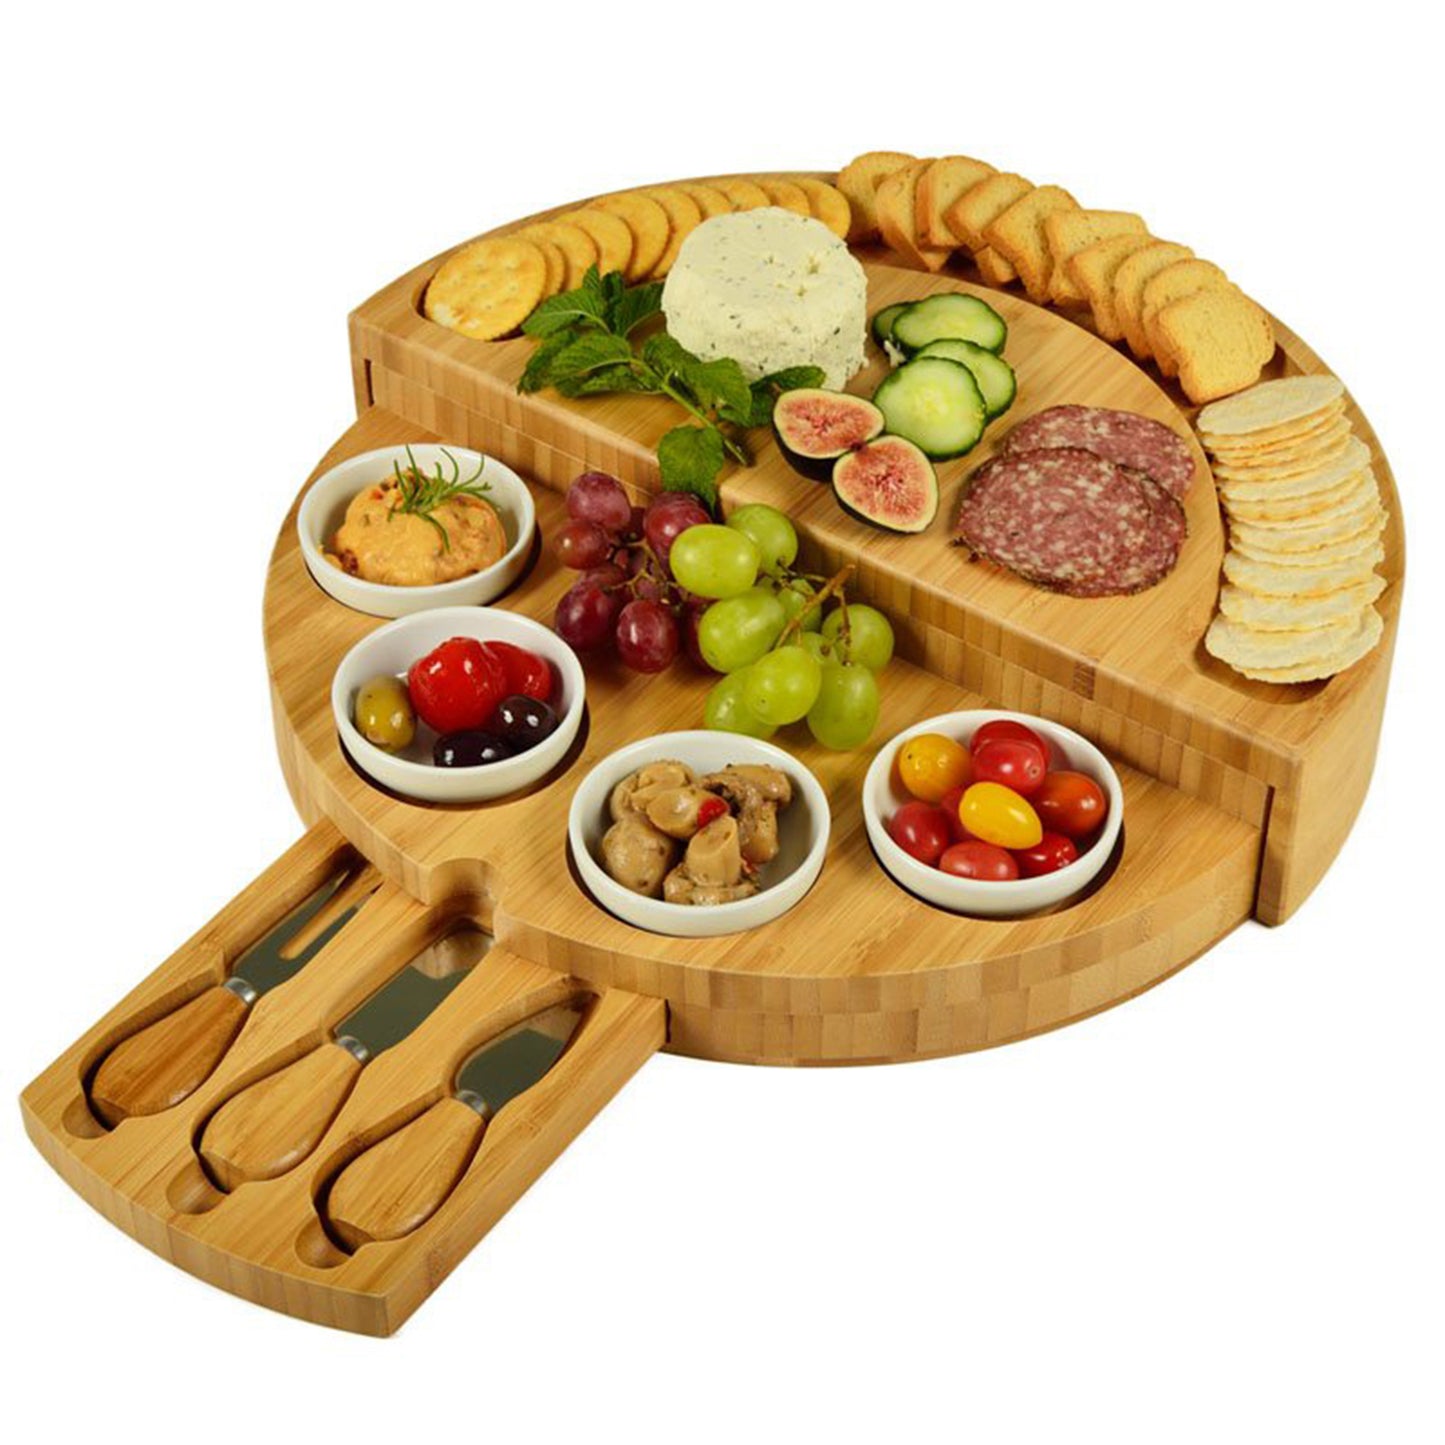 Wooden Delight Platter: Segmented Snacks & Sauces Stash